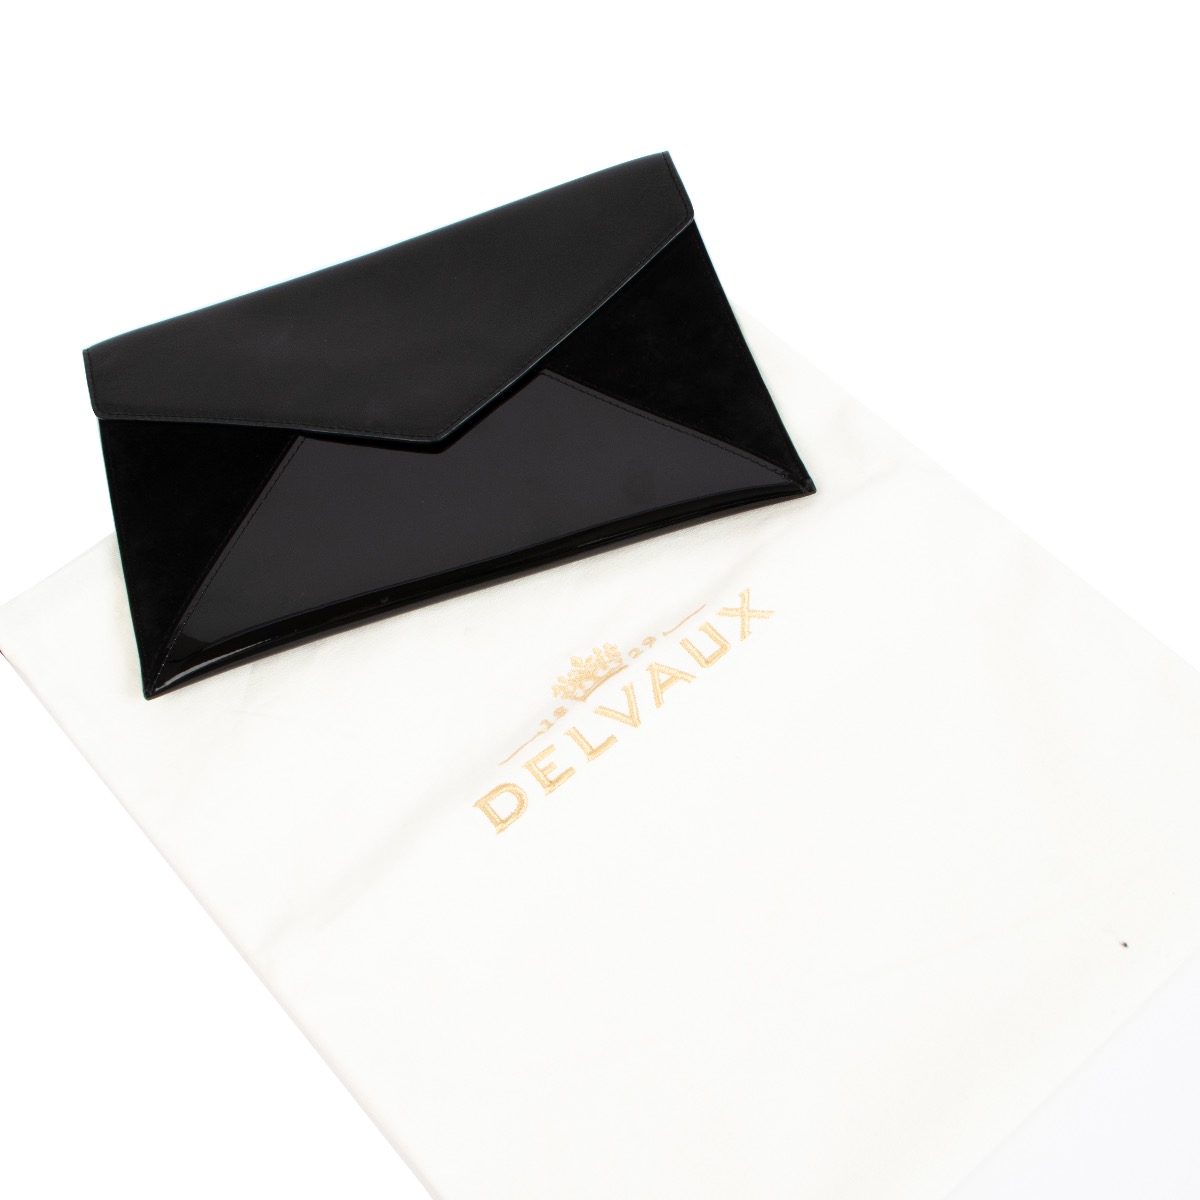 Delvaux Navy Leather Envelope Clutch – Second Serve